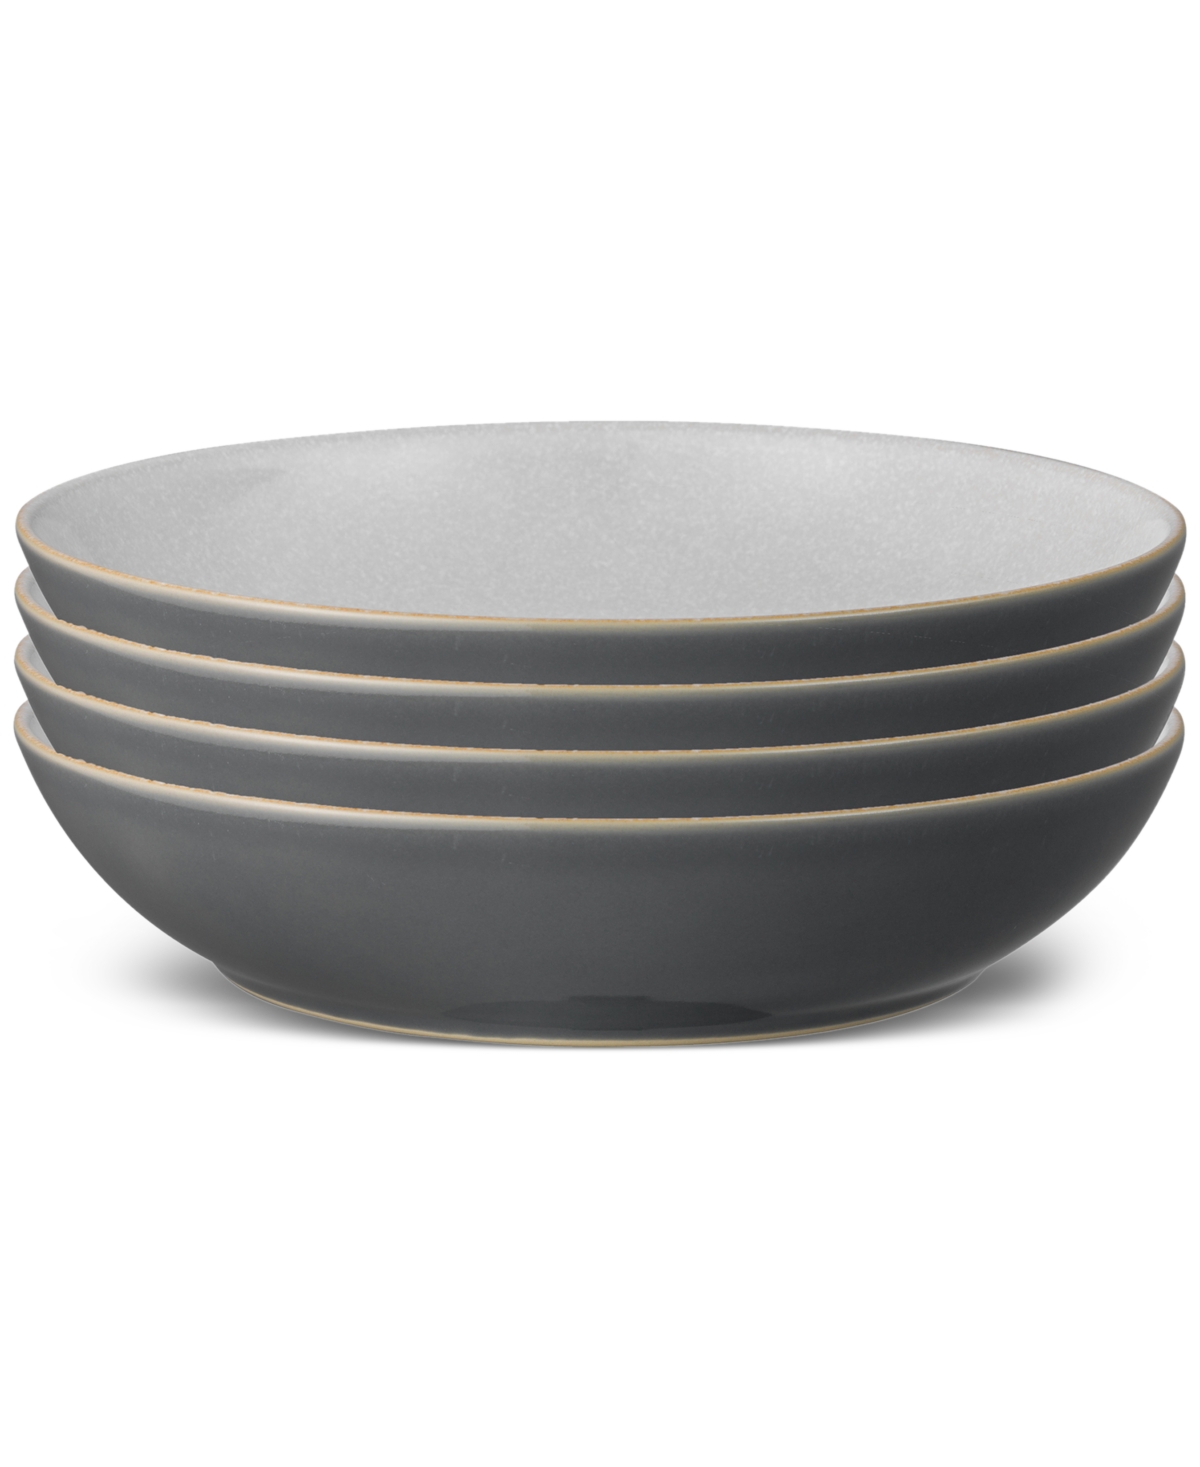 Elements Collection Stoneware Pasta Bowls, Set of 4 - Dk Grey